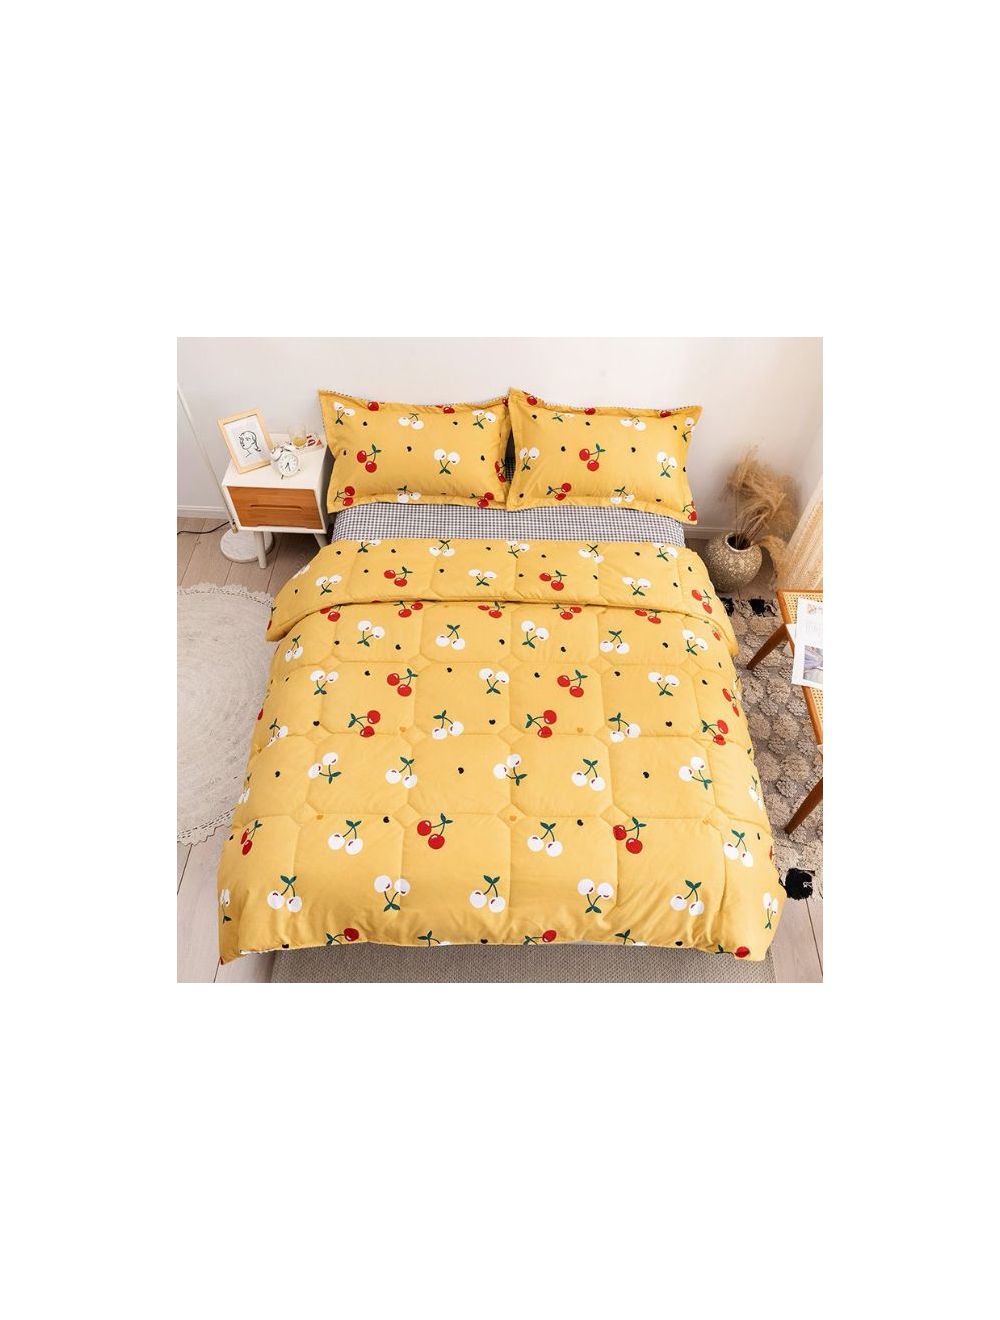 Rishahome 4-Piece King Size Comforter Set Yellow 220x240 cm